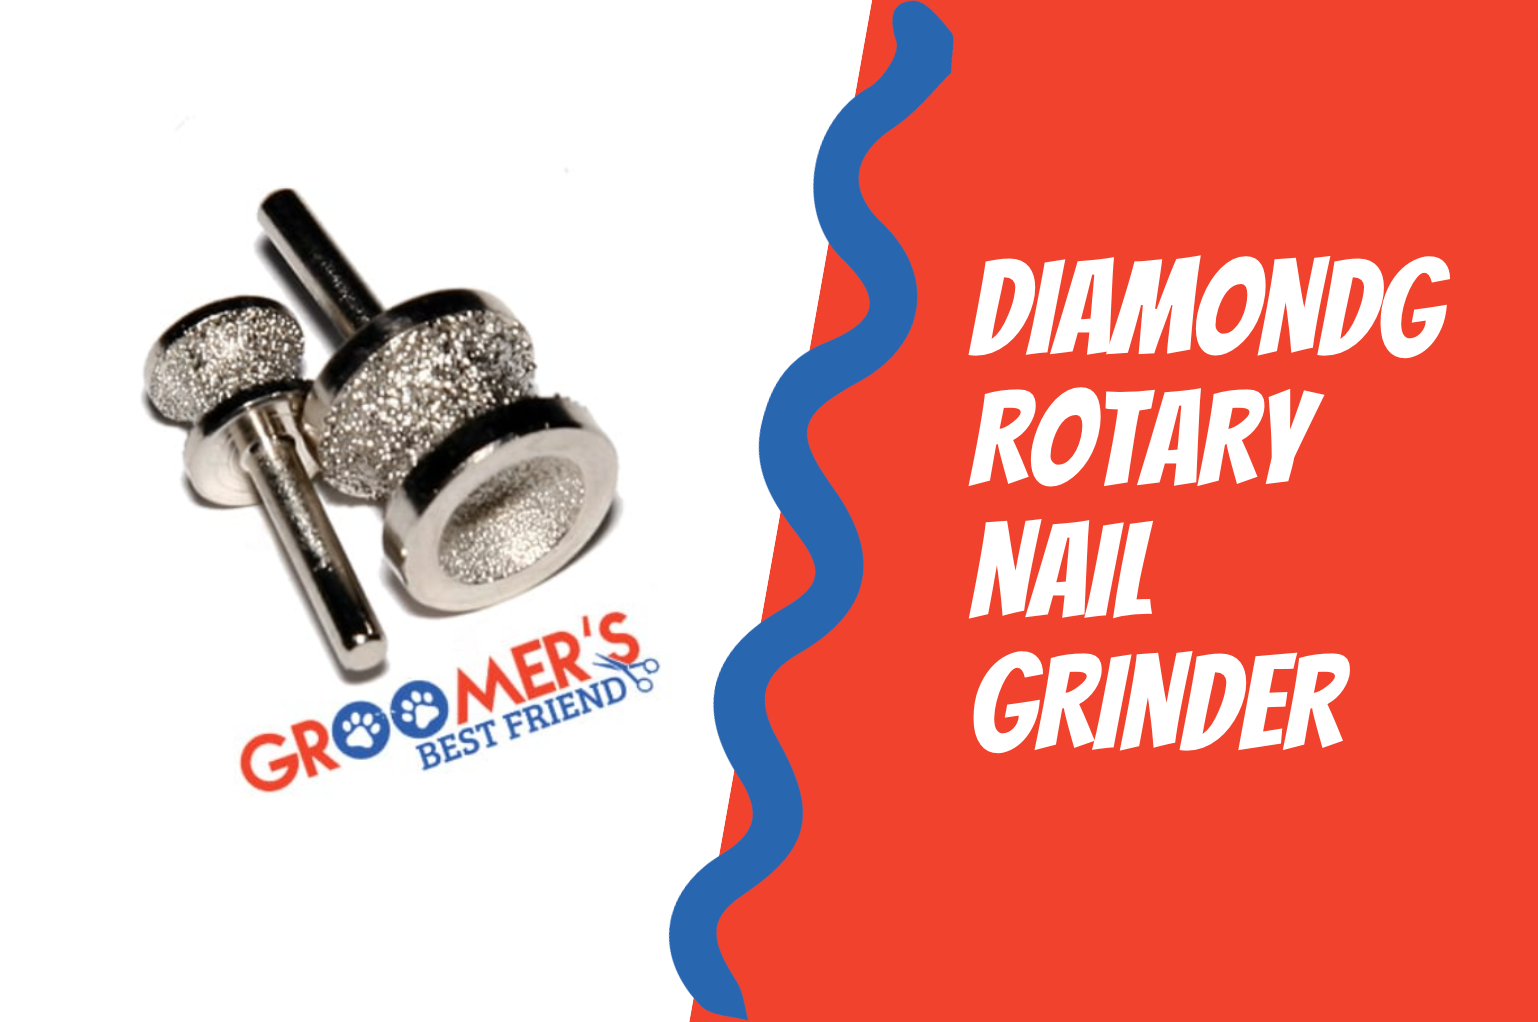 Load video: Diamondg Rotary Nail Grinder